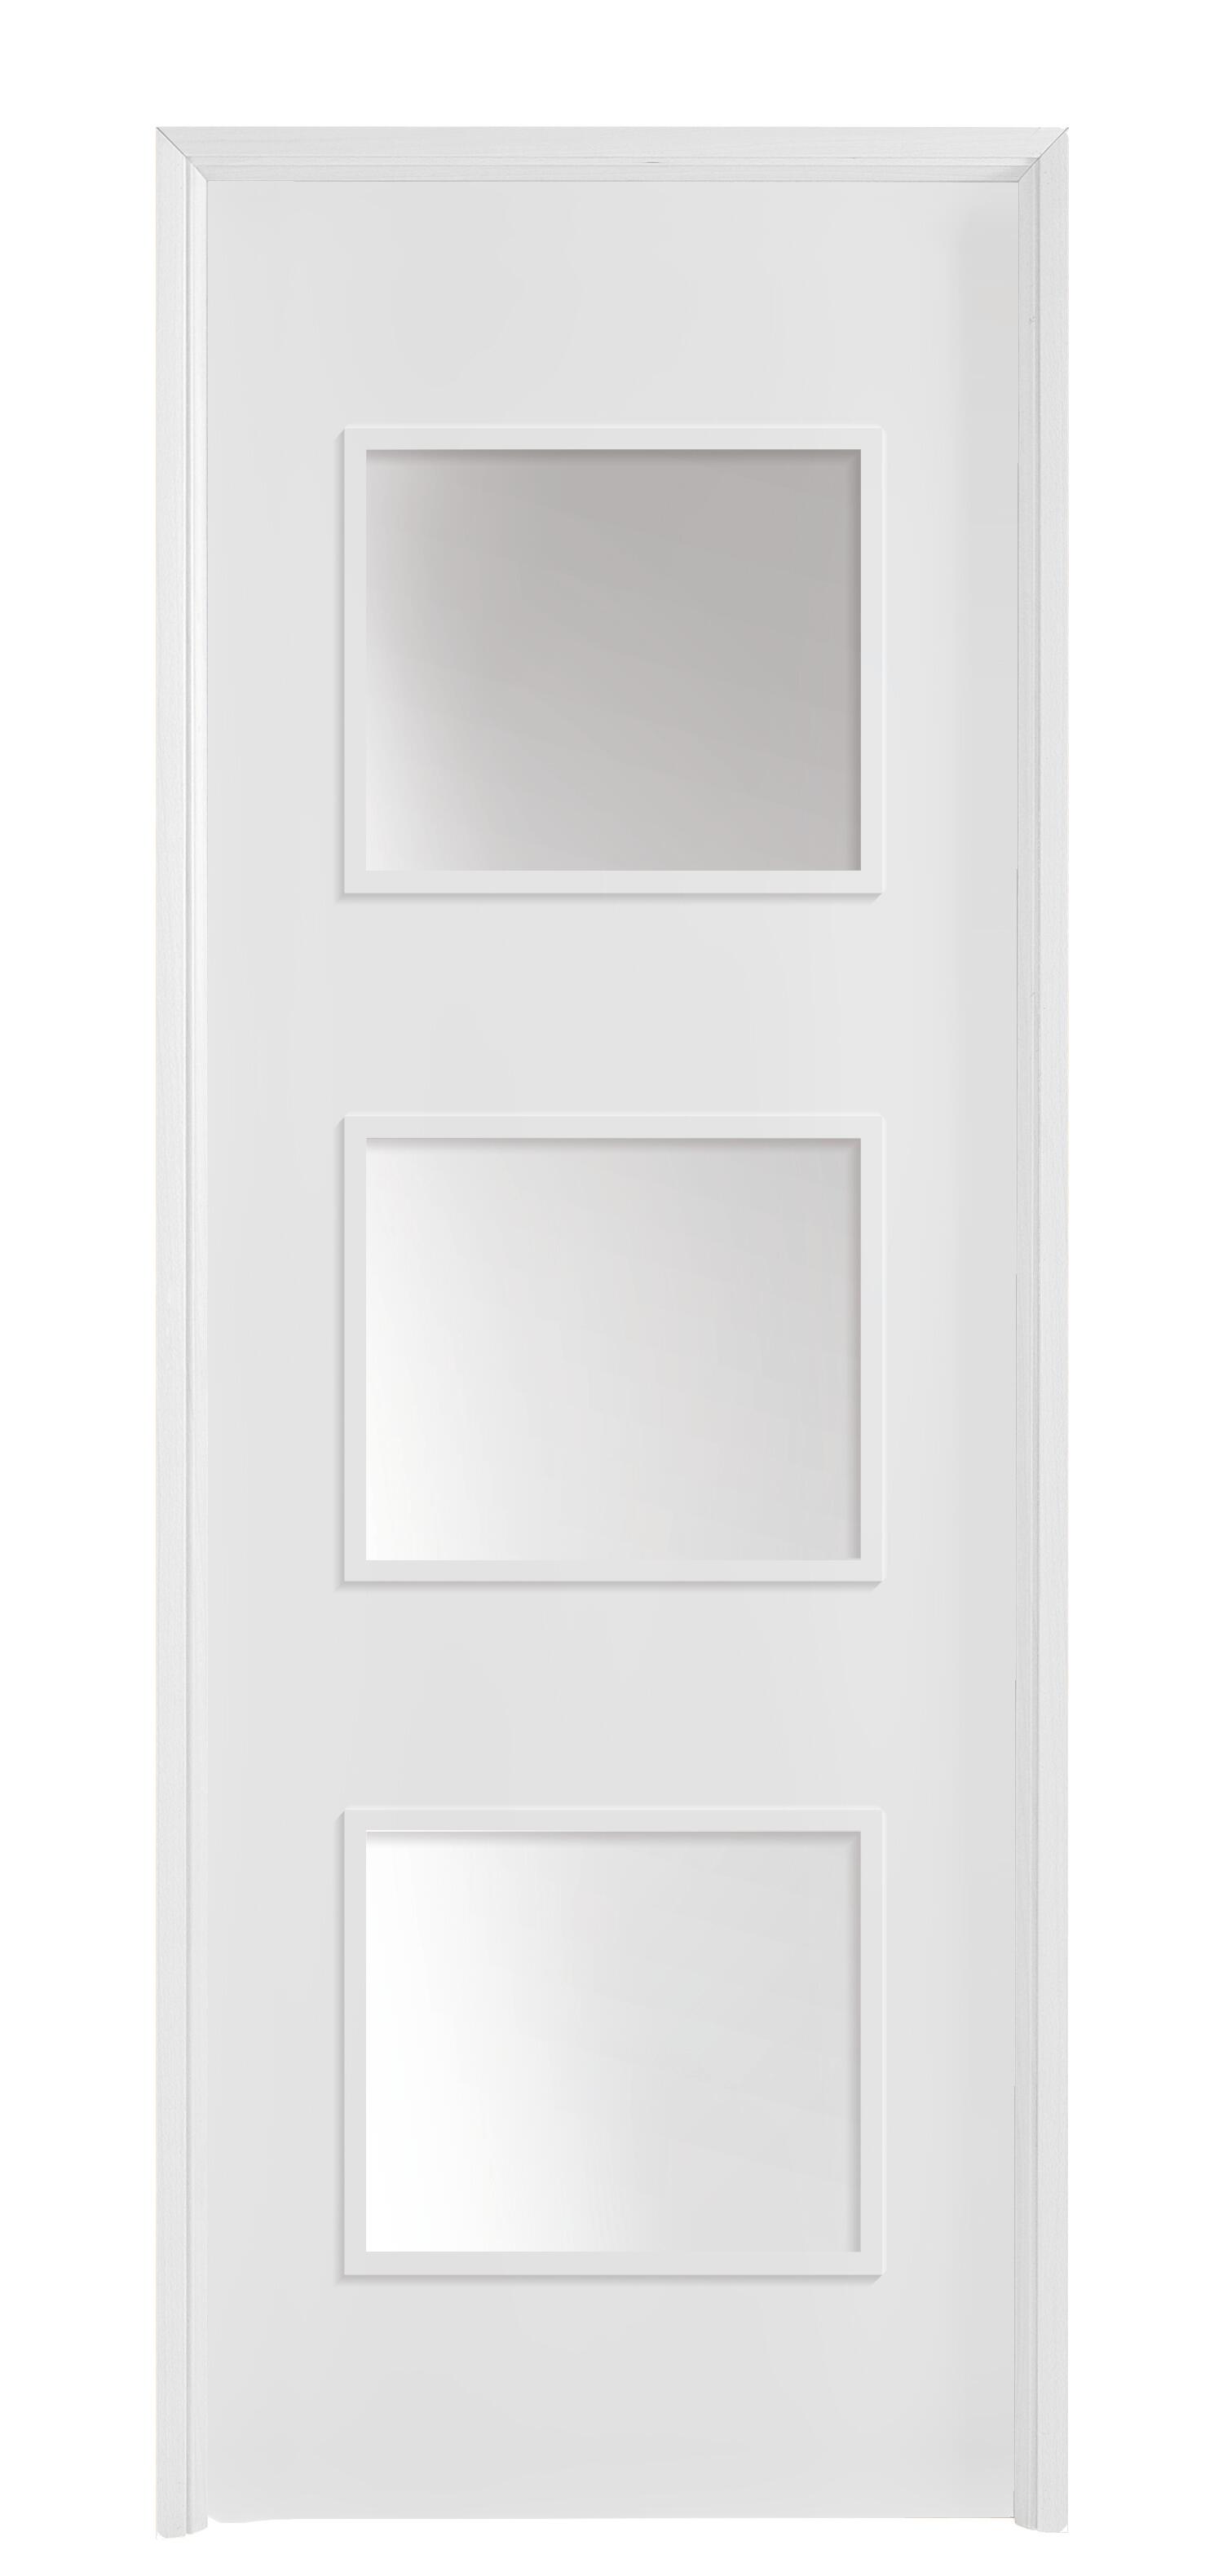 Puerta con cristal bari plus blanca 7x2x62,5 cm d